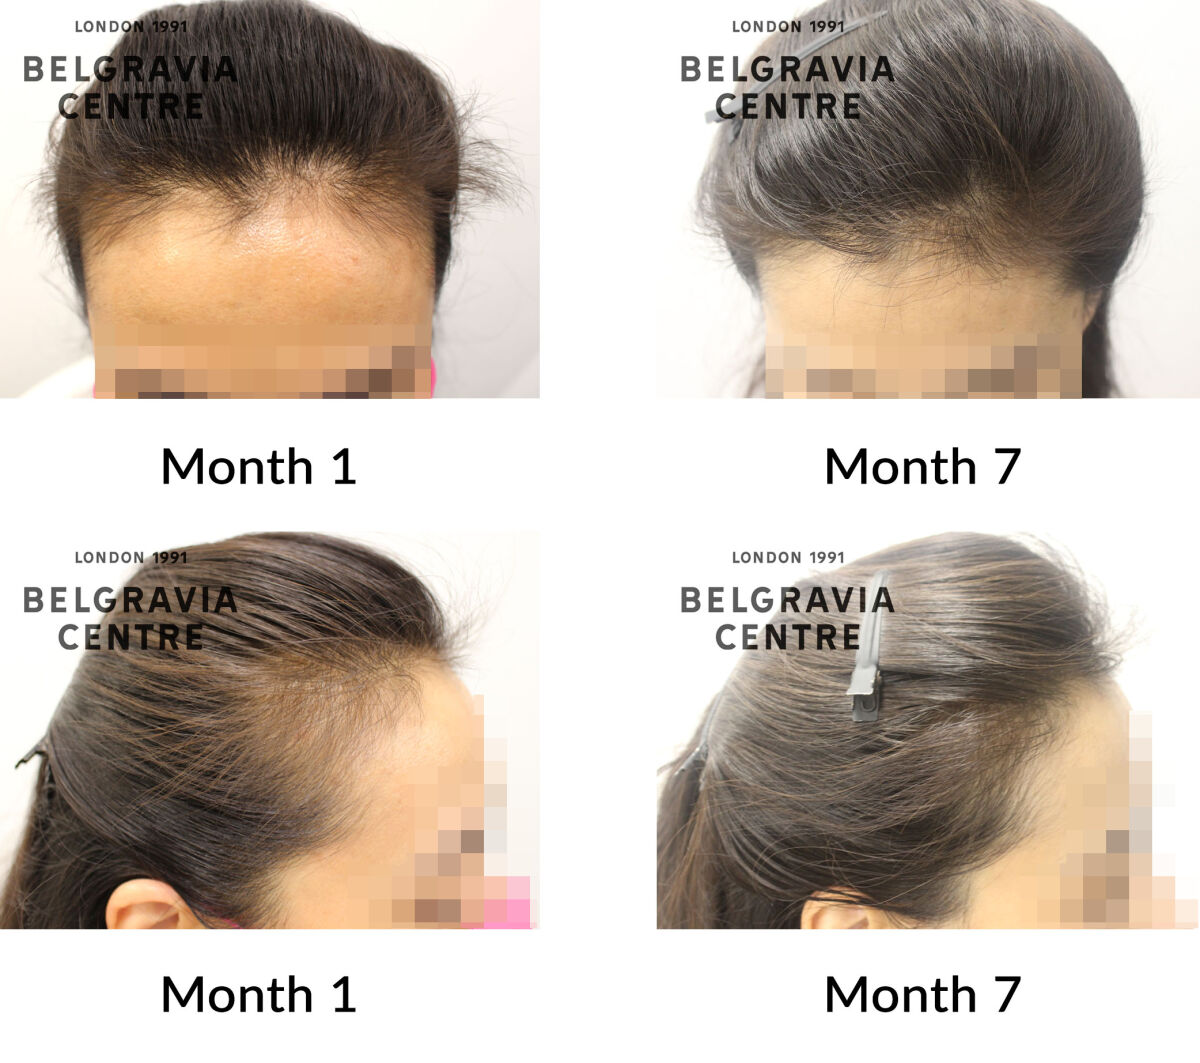 female pattern hair loss the belgravia centre 160762